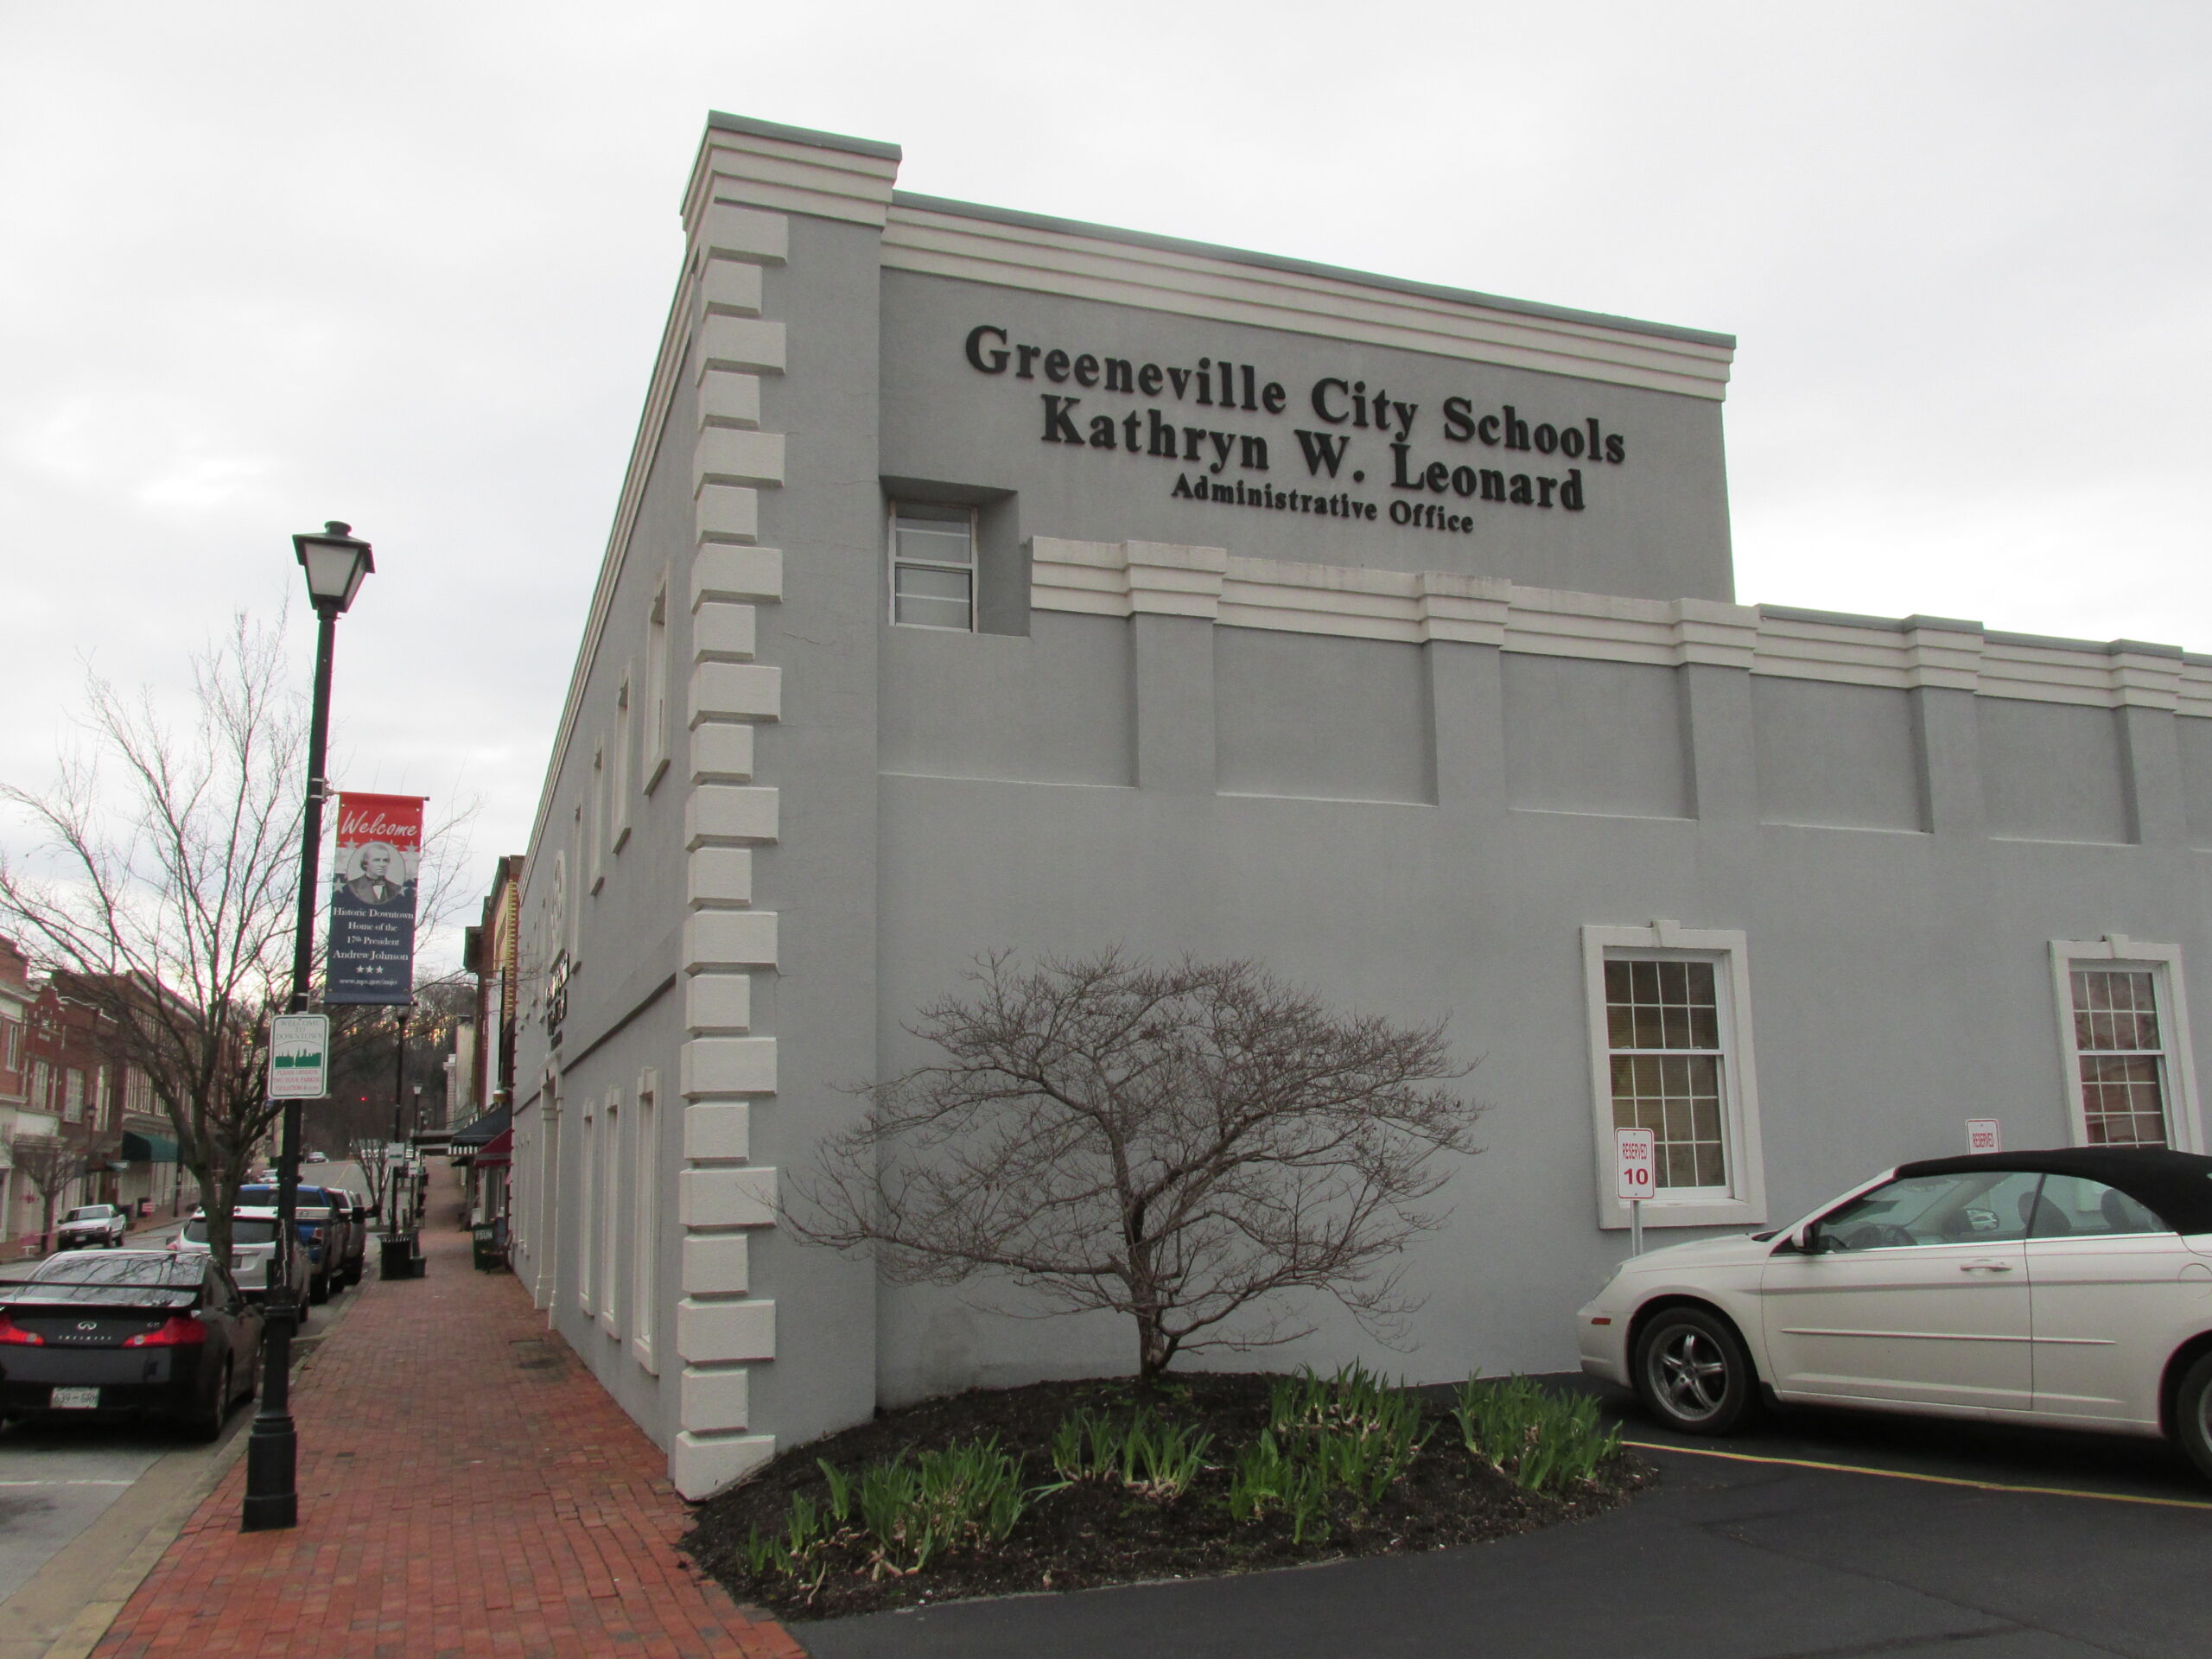 Greeneville City Schools Central Office